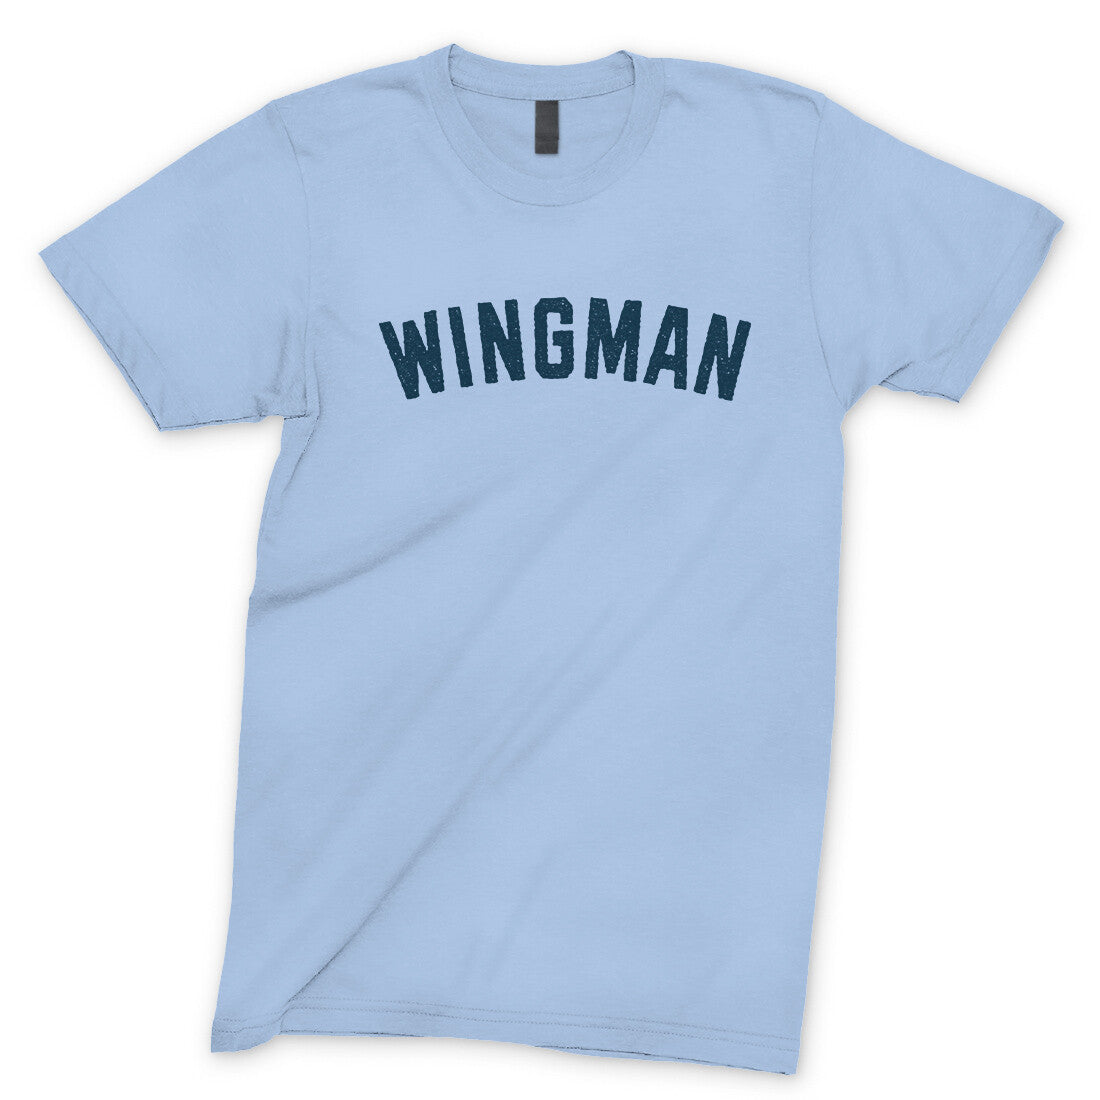 Wingman in Light Blue Color